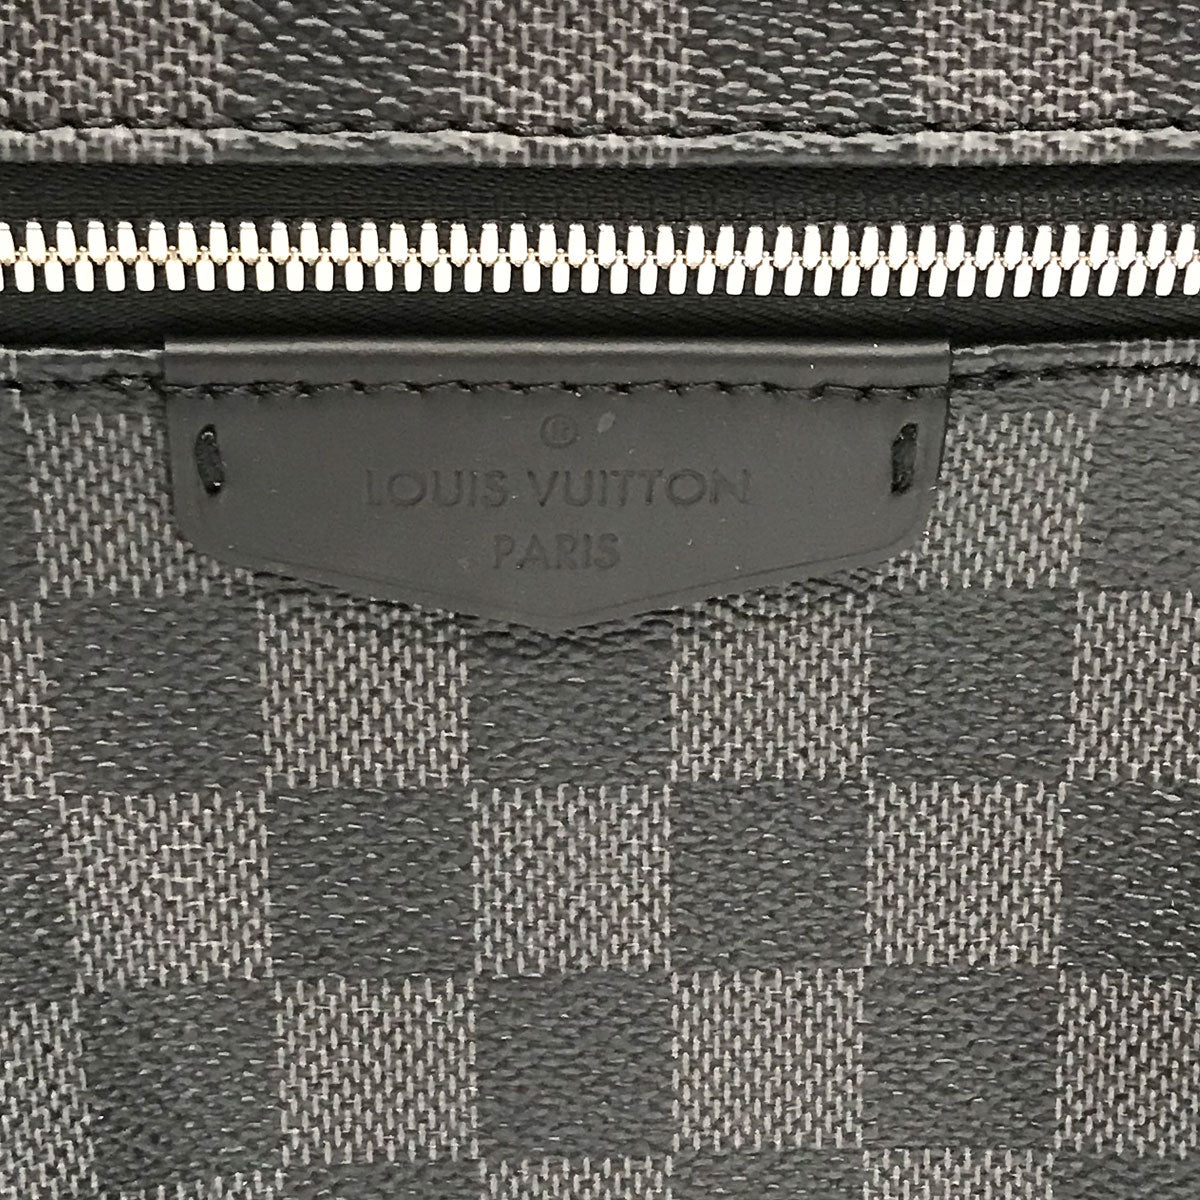 Louis Vuitton Damier Graphite Josh Backpack 87lk727s